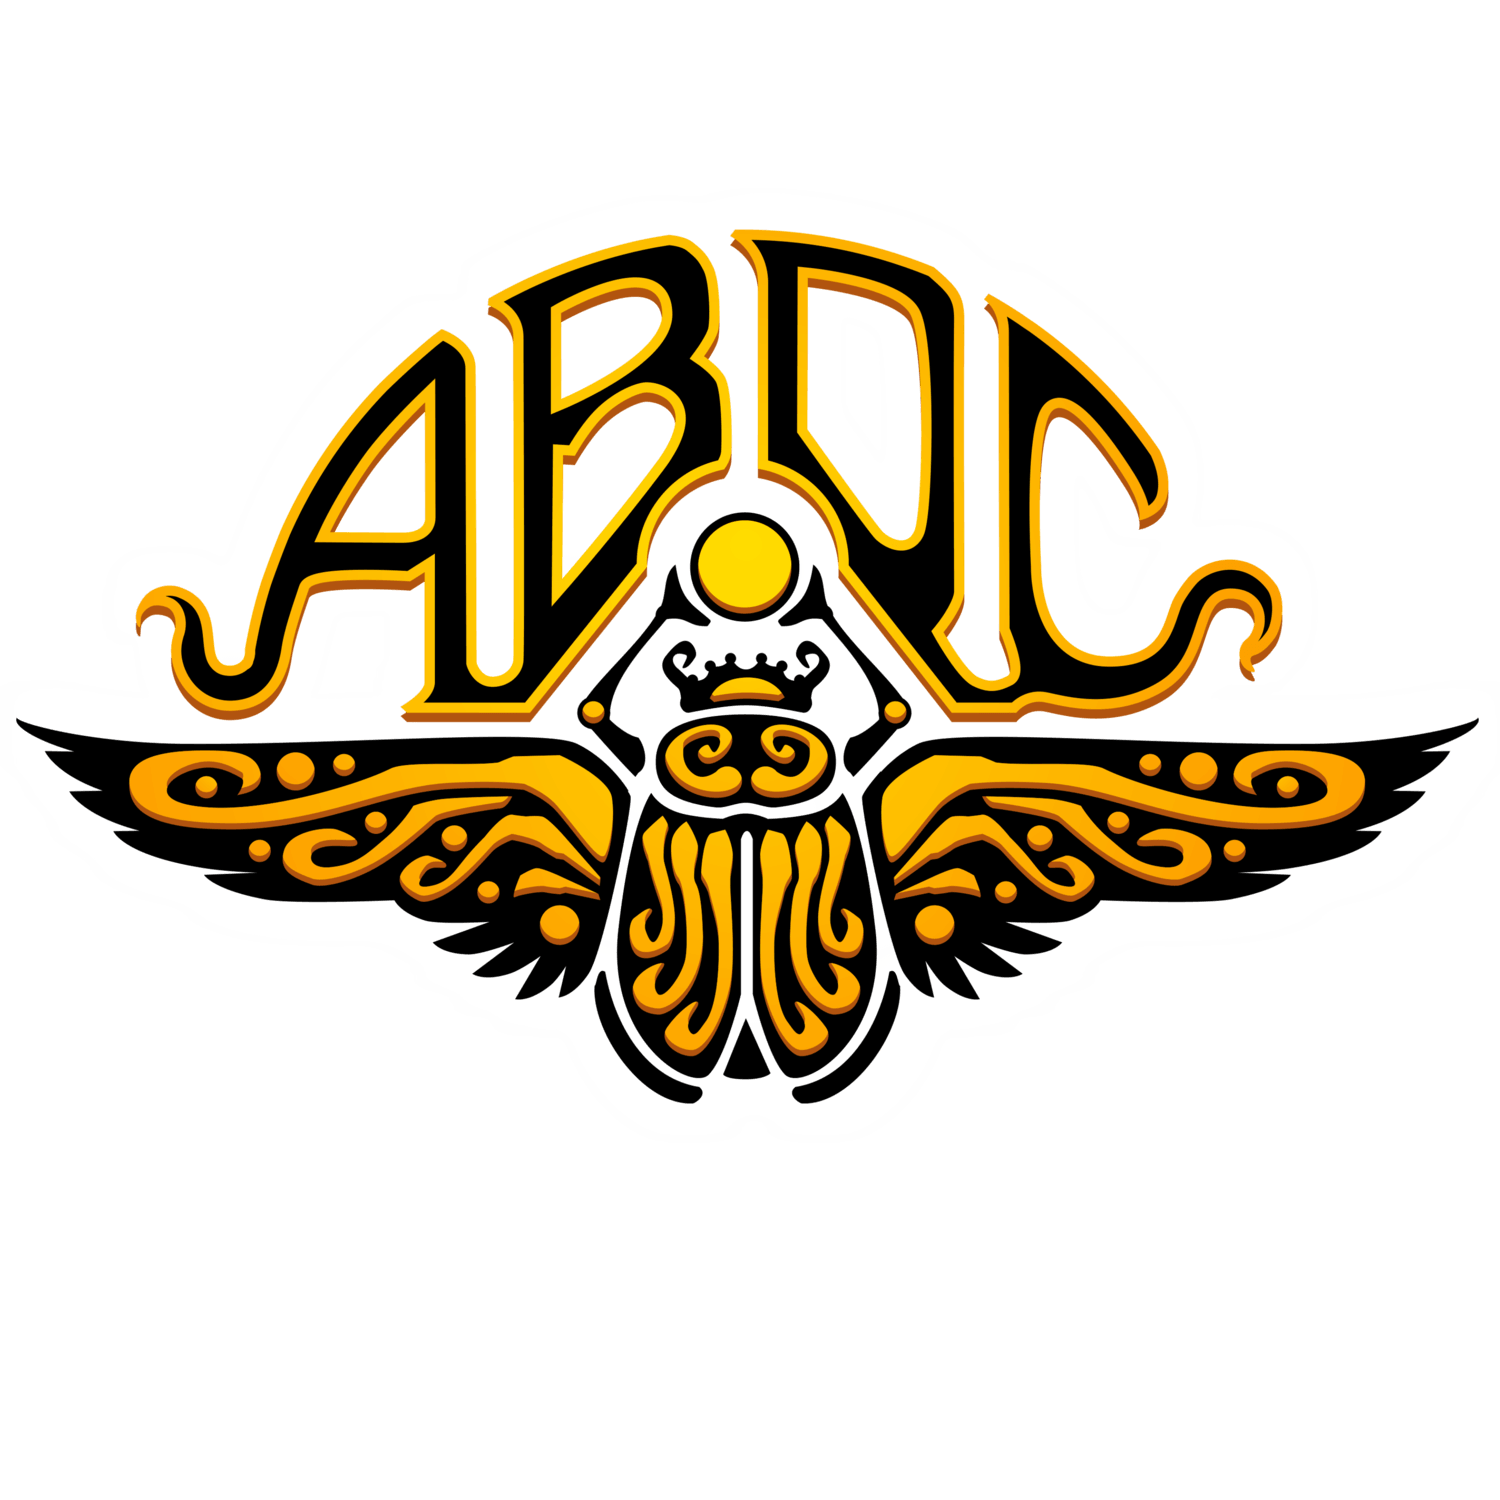 ABDC Logo - The Austin Belly Dance Convention